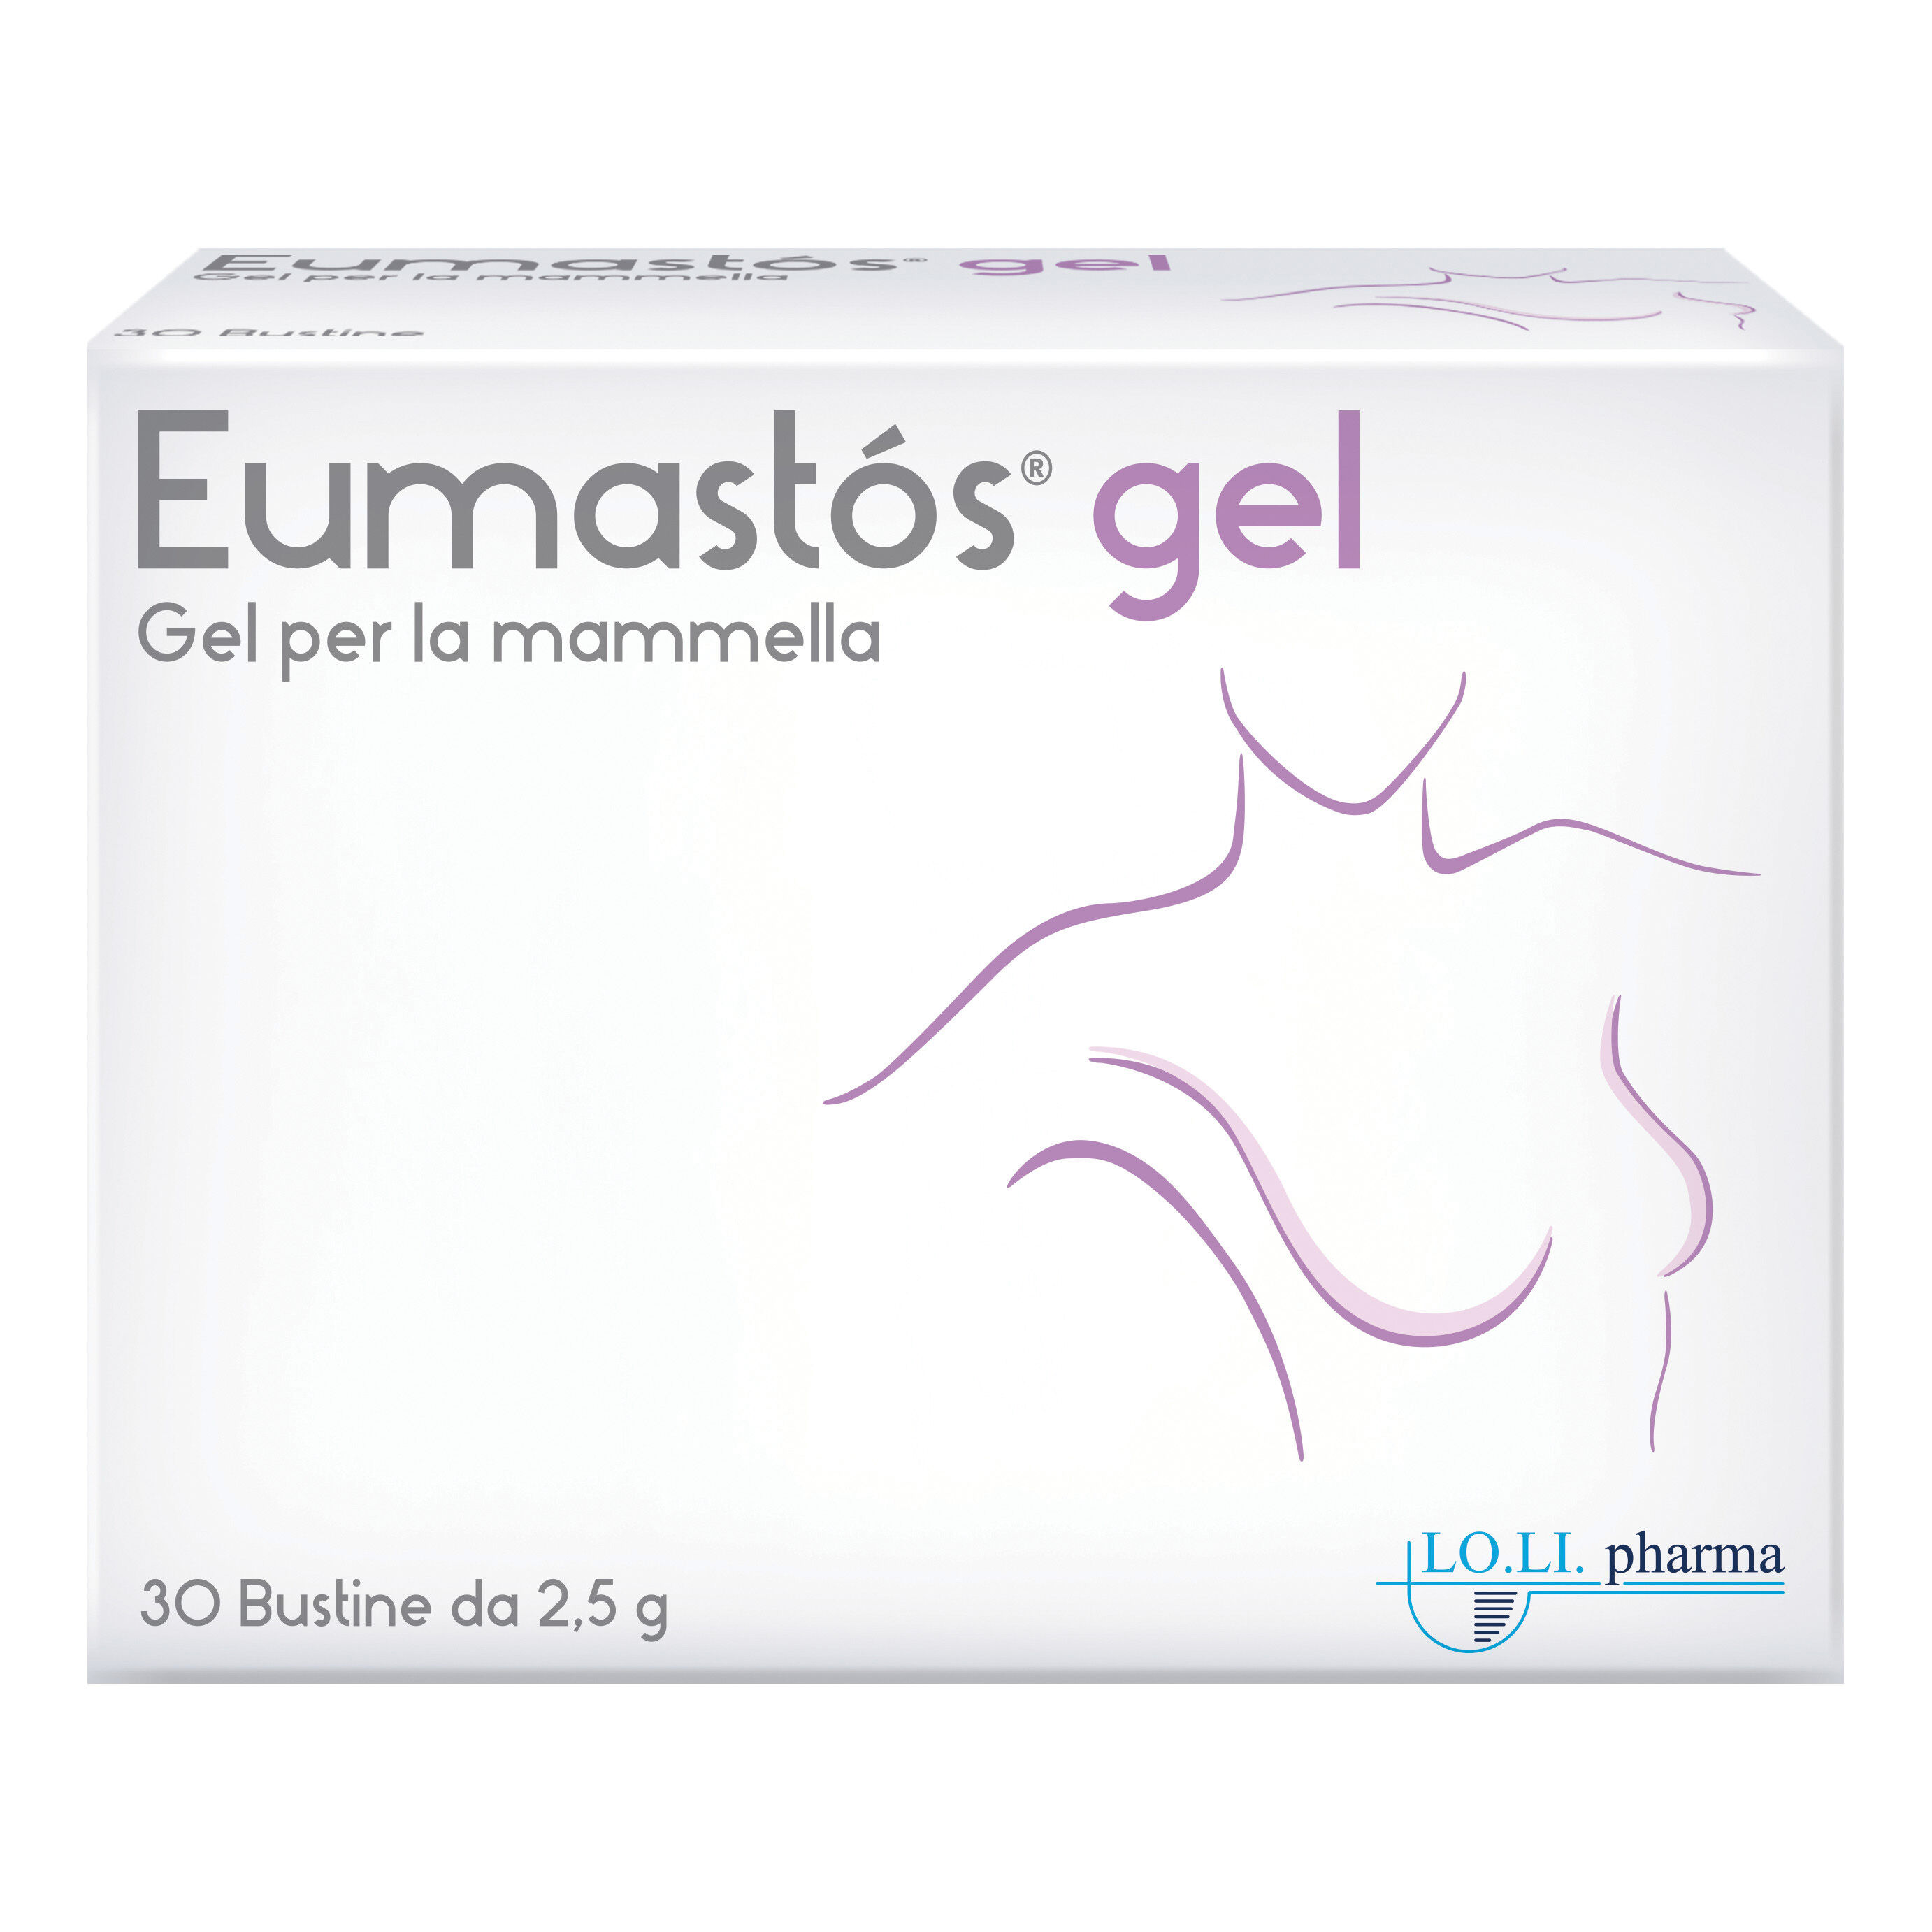 lo.li.pharma eumastos gel 30 bust.75g